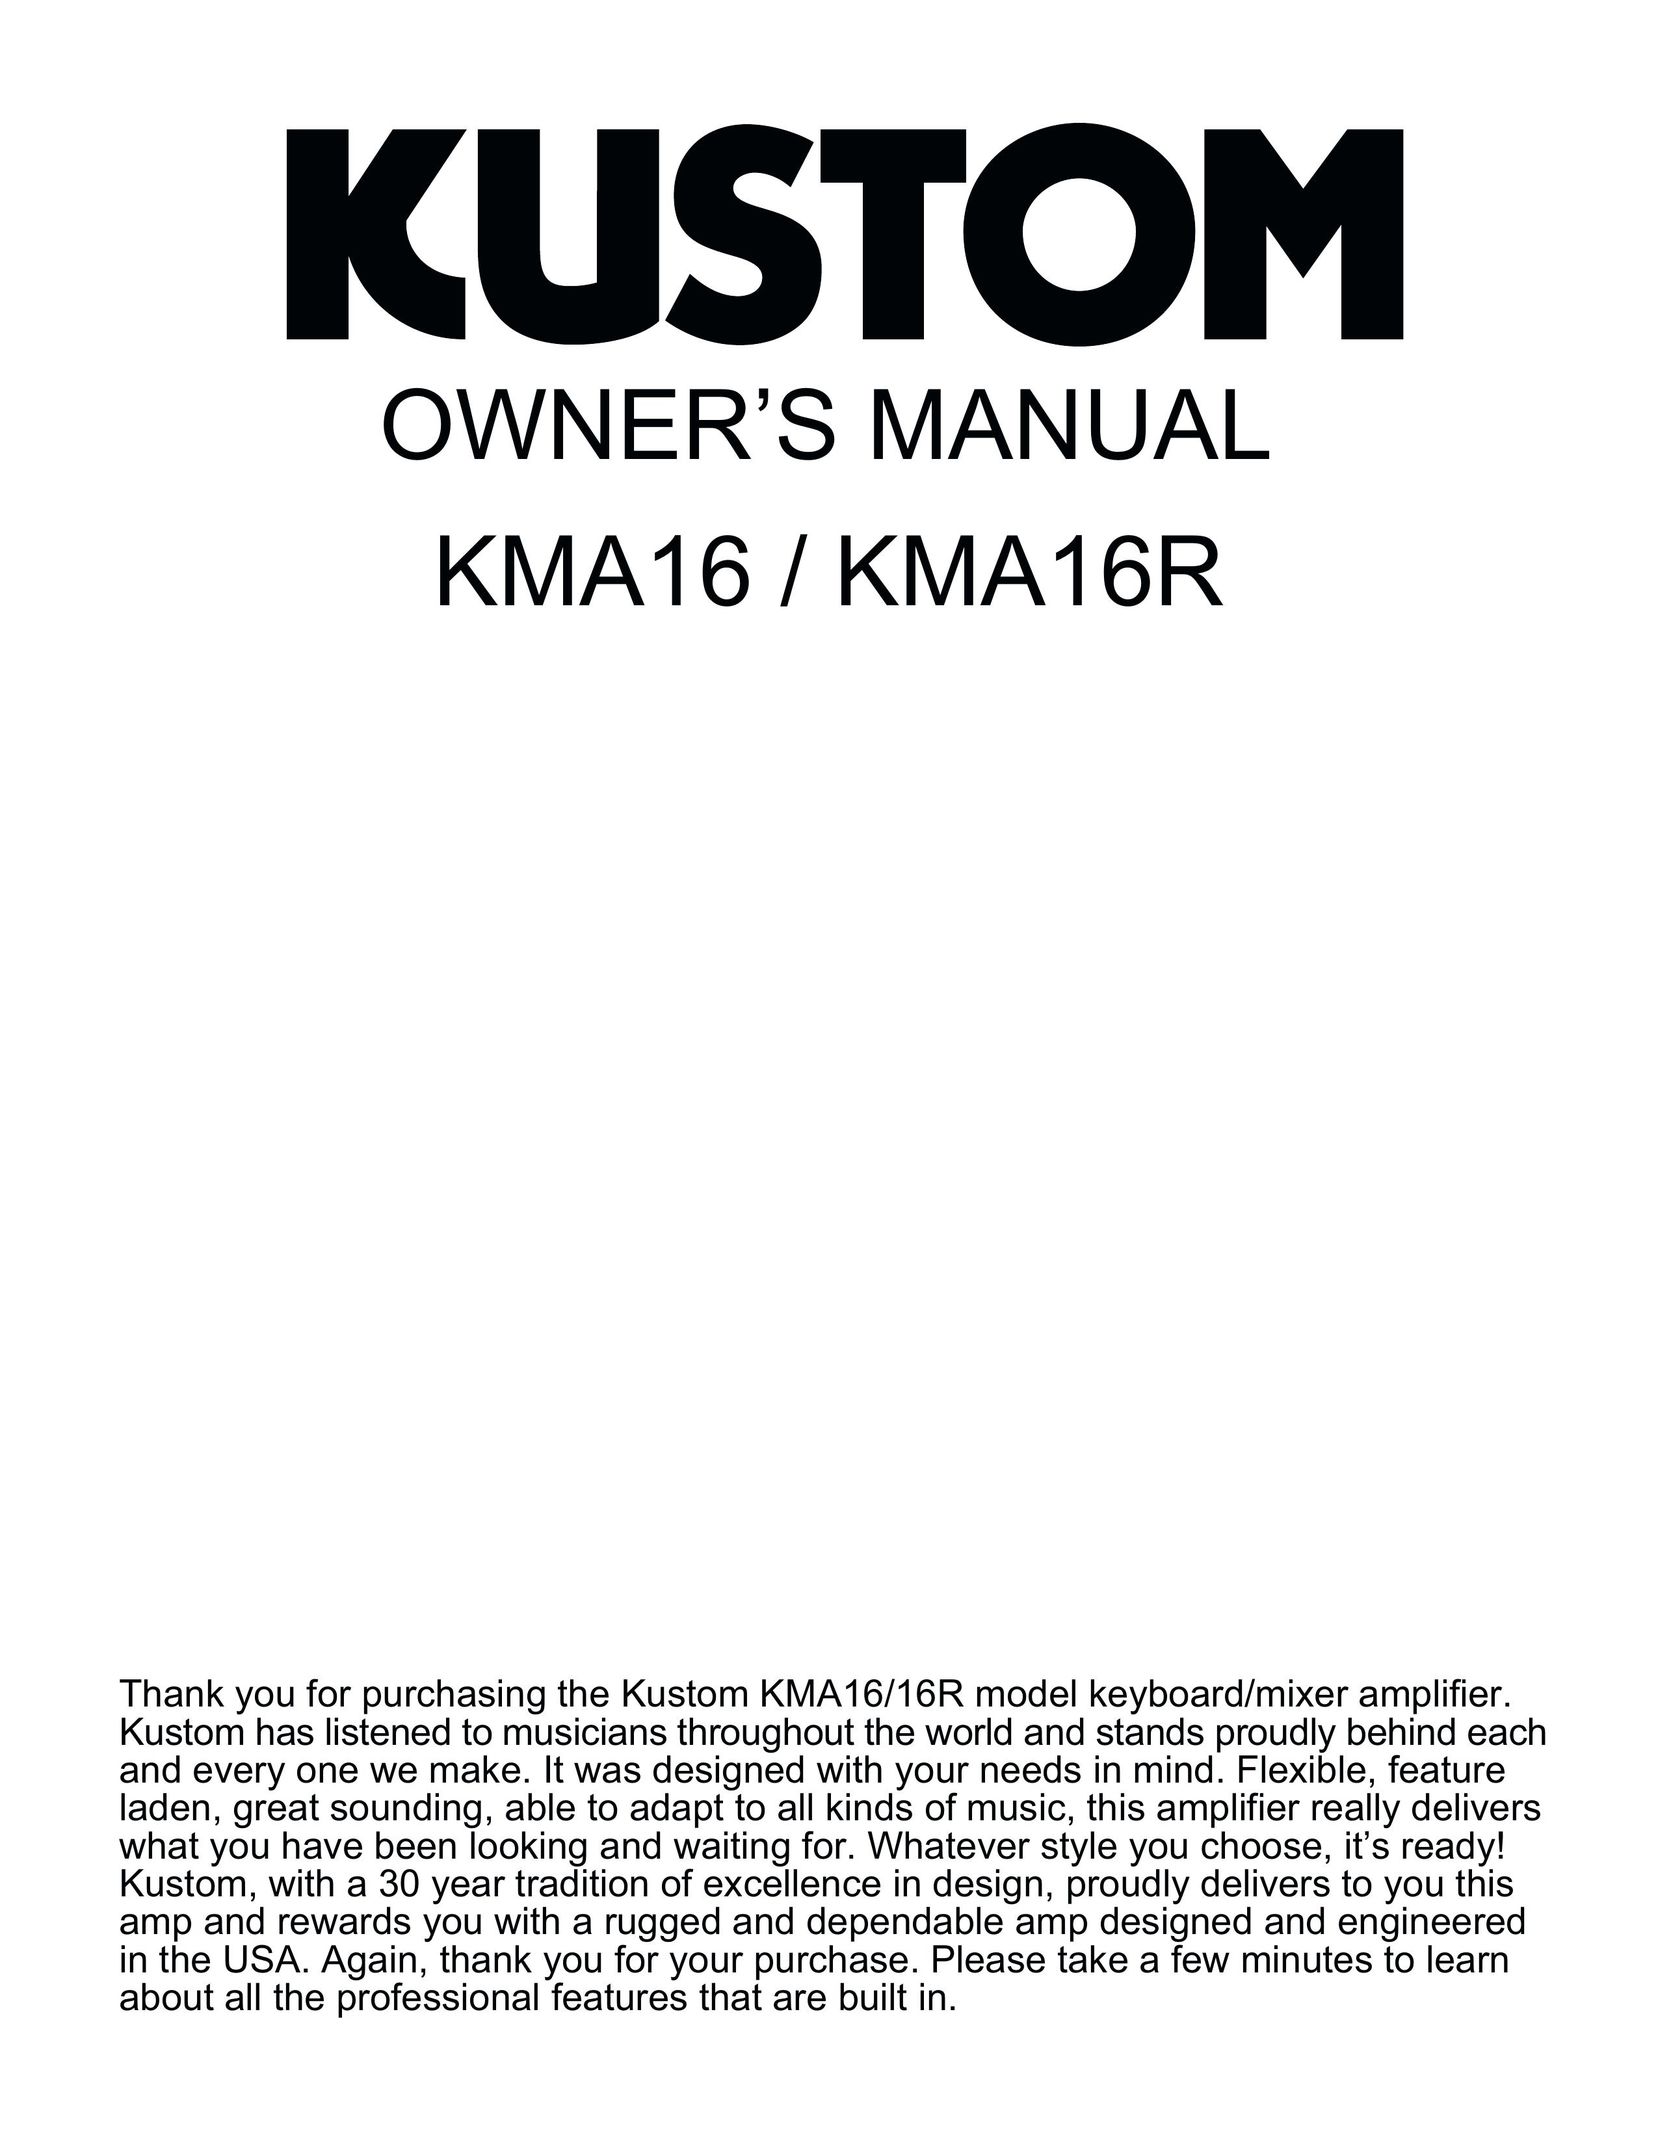 Kustom KMA16/16R Mouse User Manual